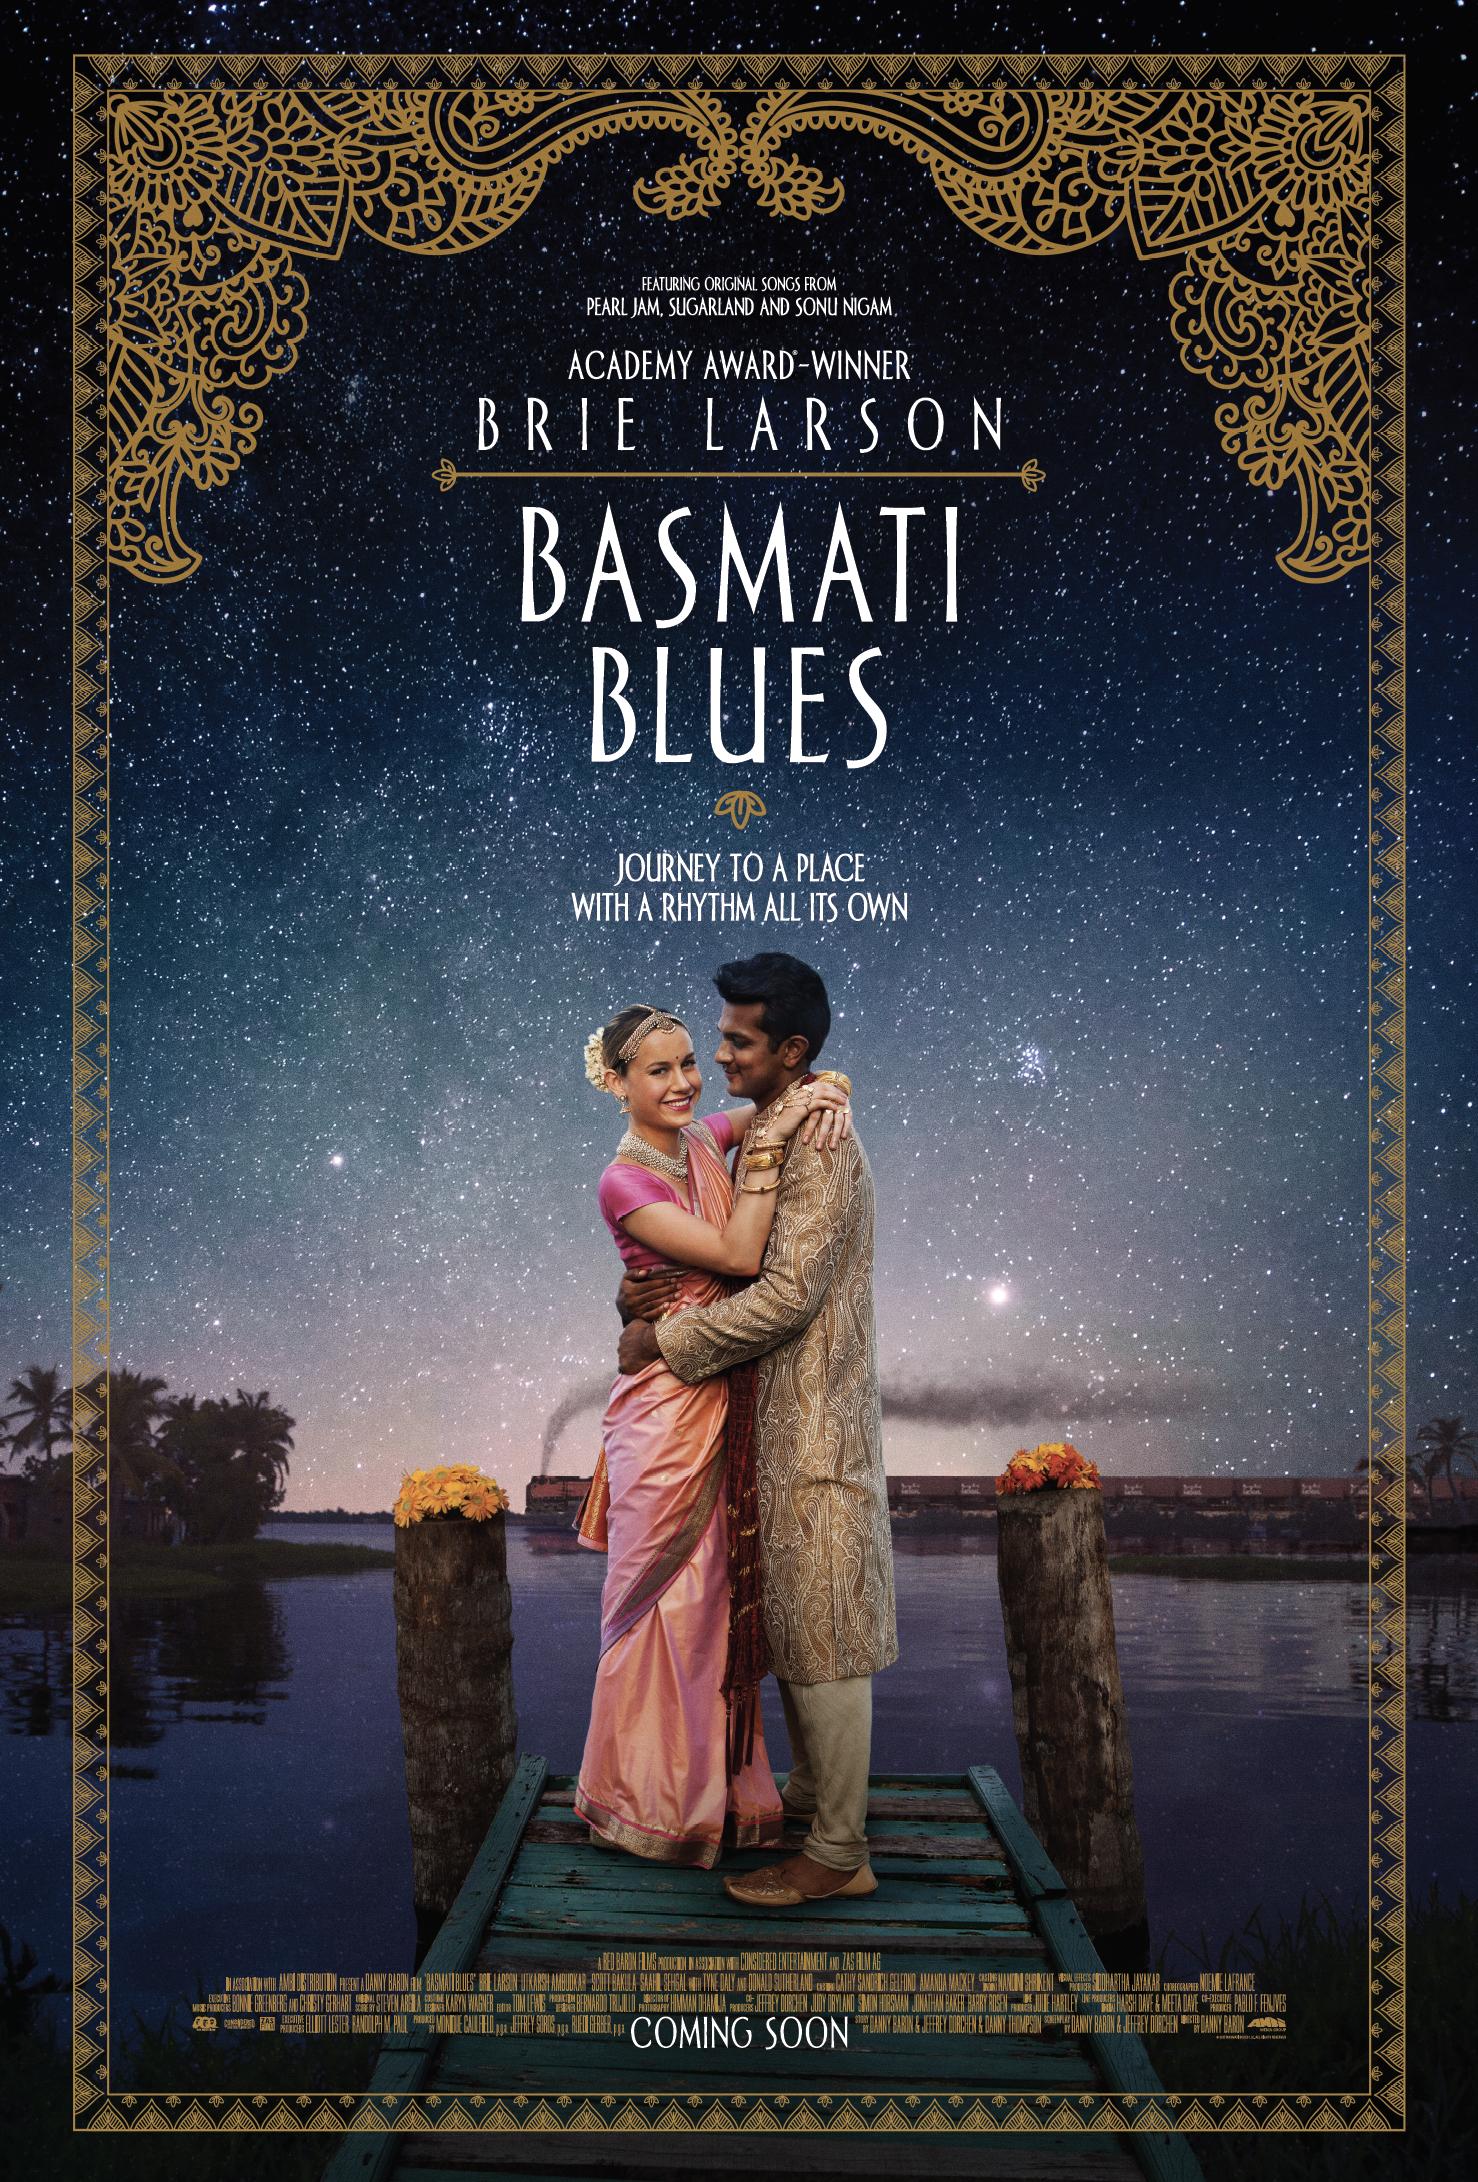 Nonton film Basmati Blues layarkaca21 indoxx1 ganool online streaming terbaru